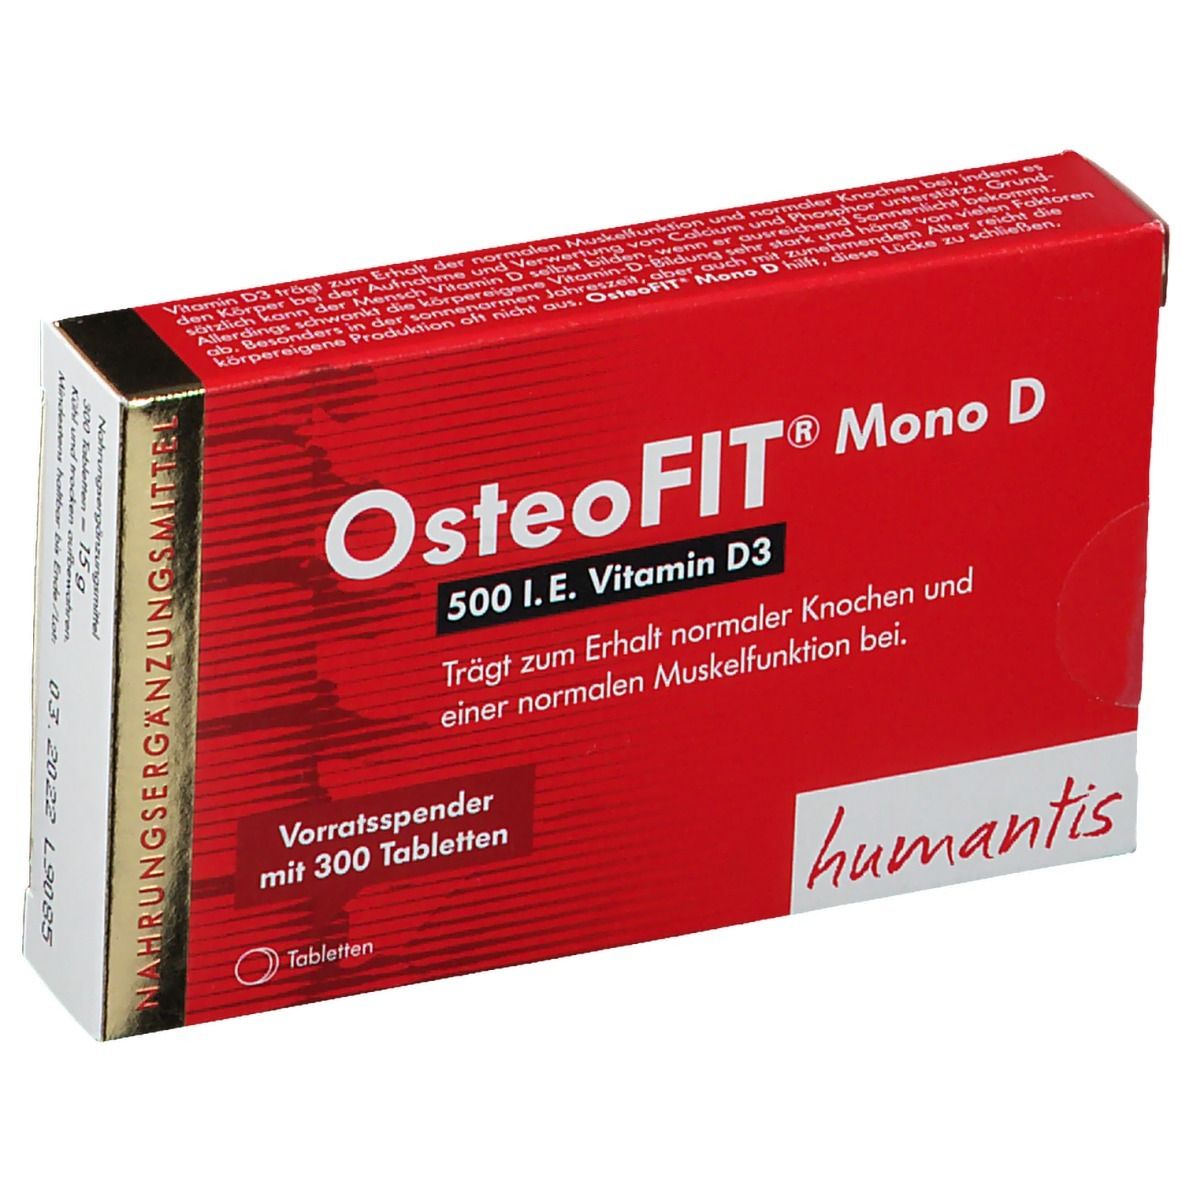 OsteoFIT® Mono D Tabletten